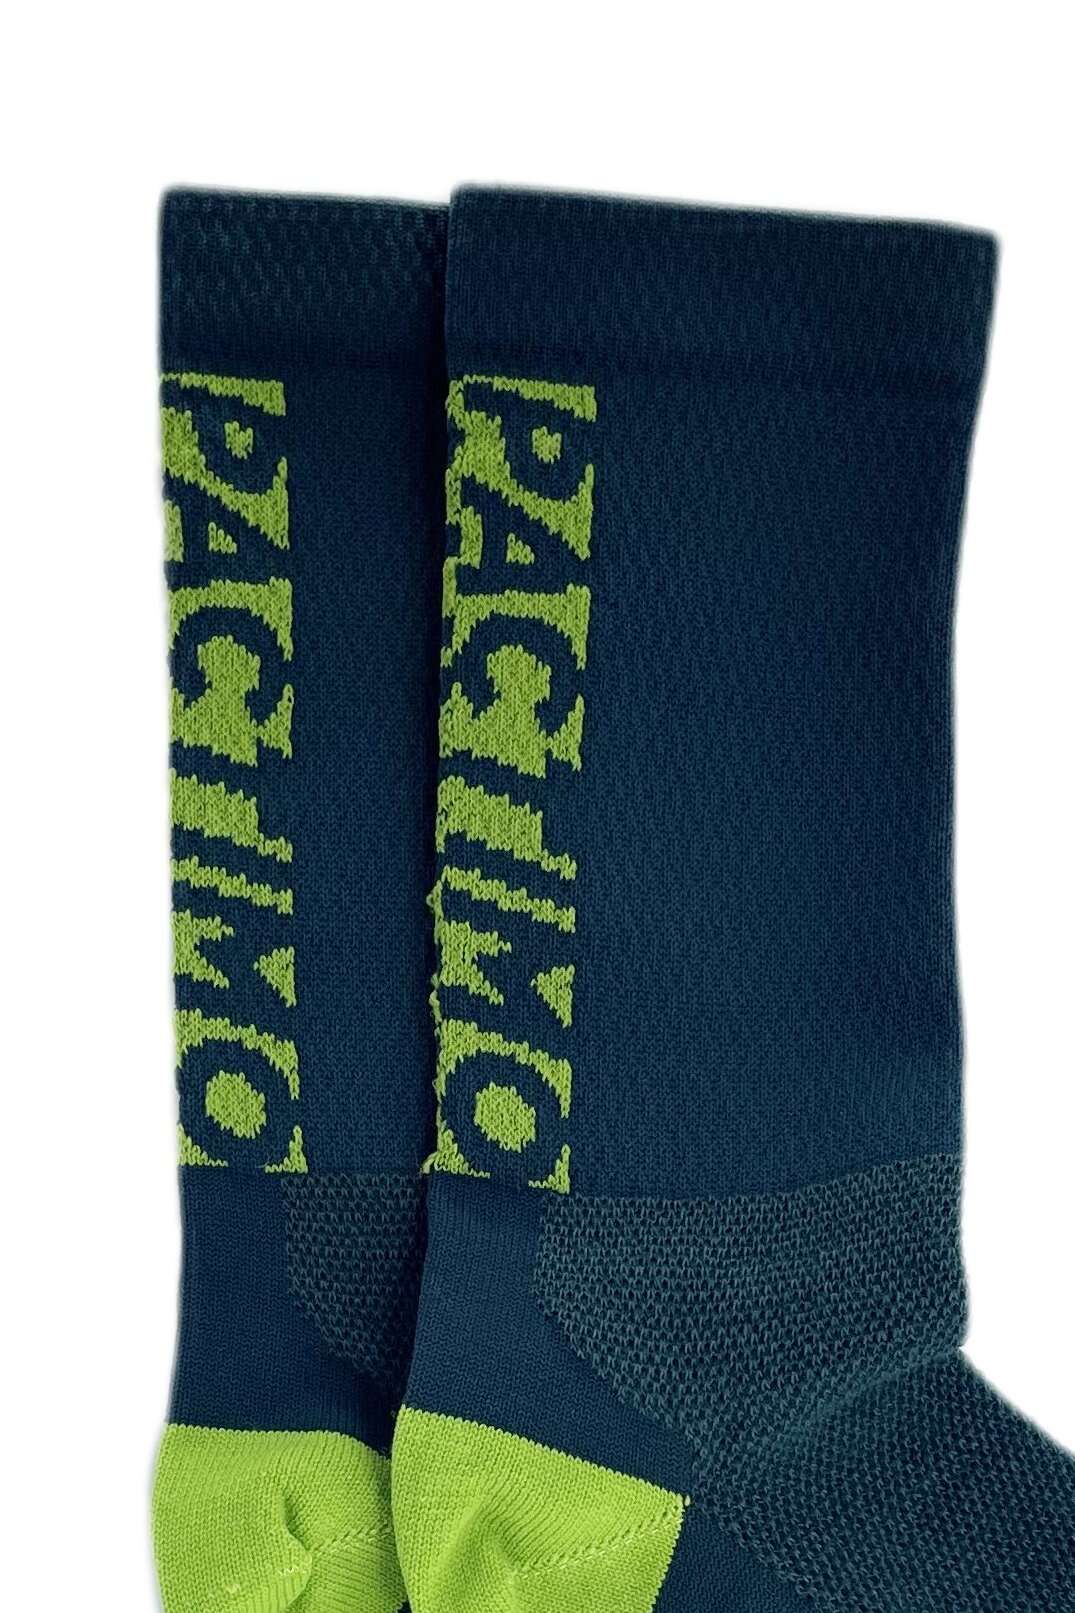 Pactimo Green Cycling Socks - Summit Close-Up